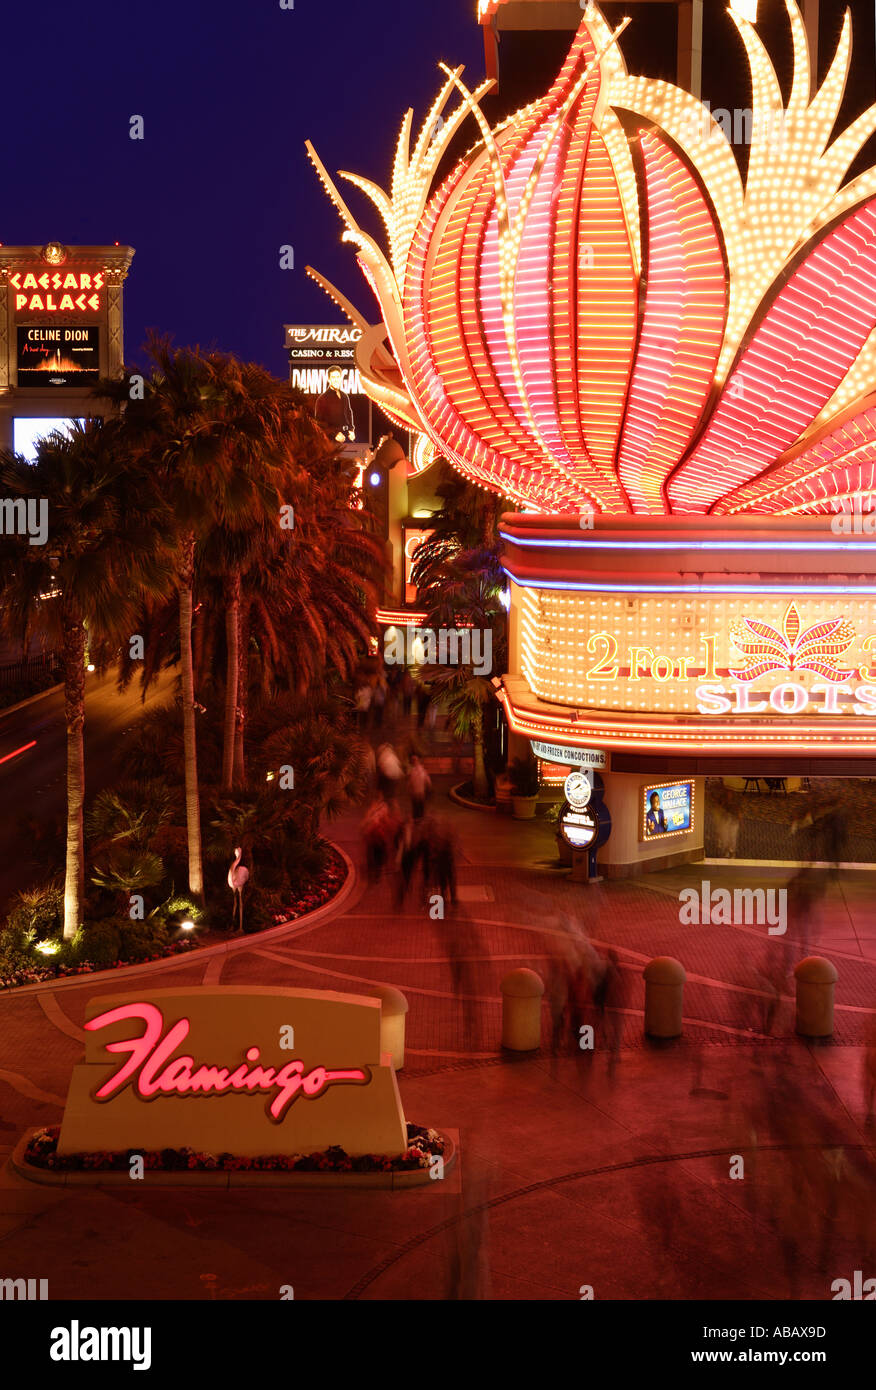 Las Vegas Flamingo Hotel Casino on The Strip Stock Photo